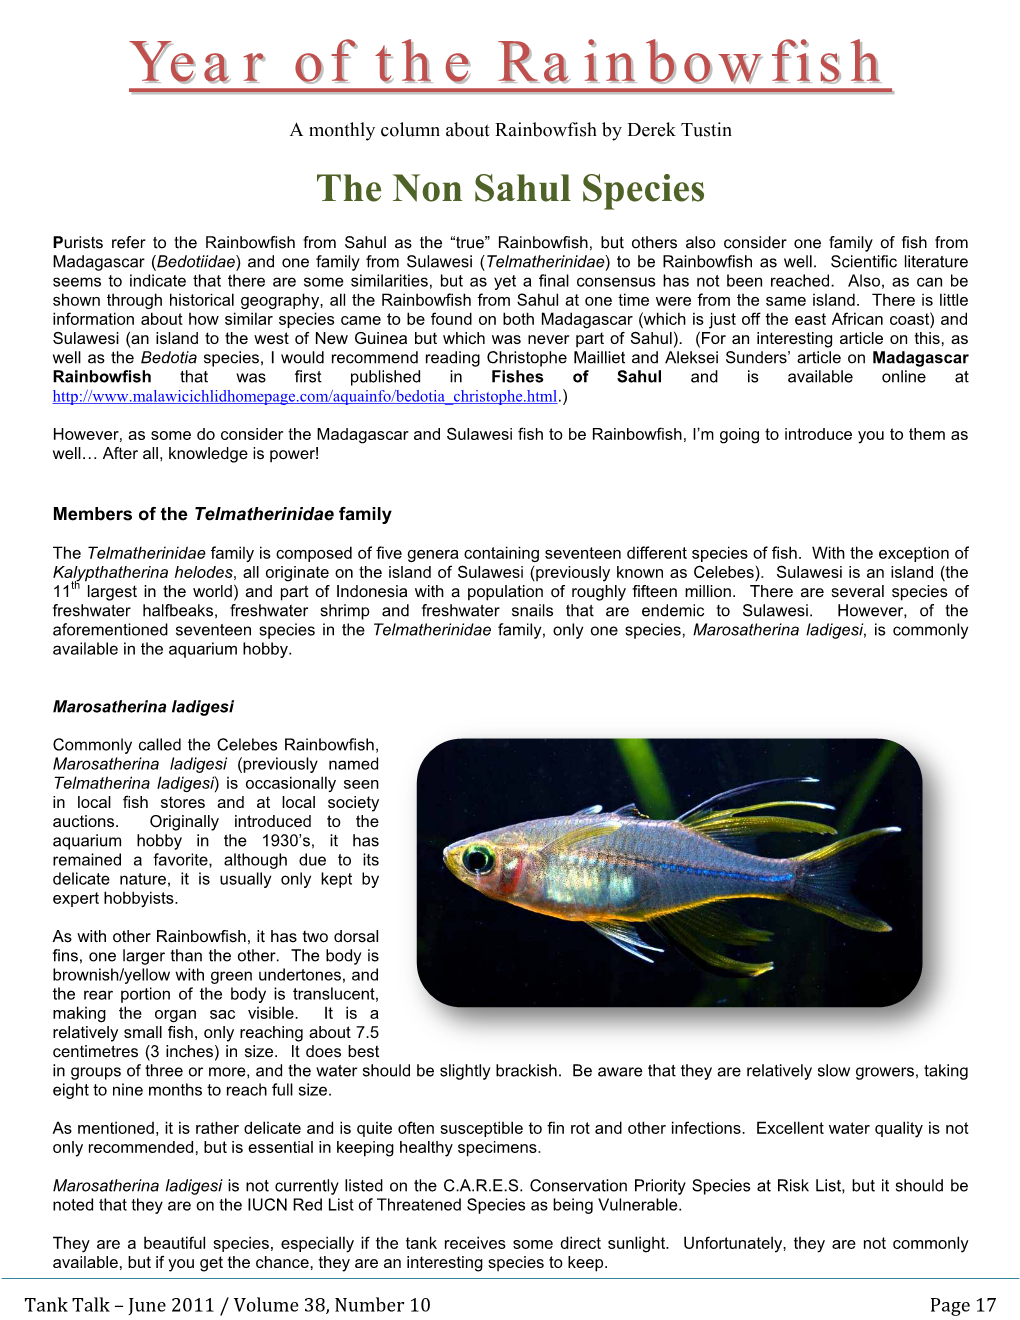 Year of the Rainbowfish – the Non Sahul Species